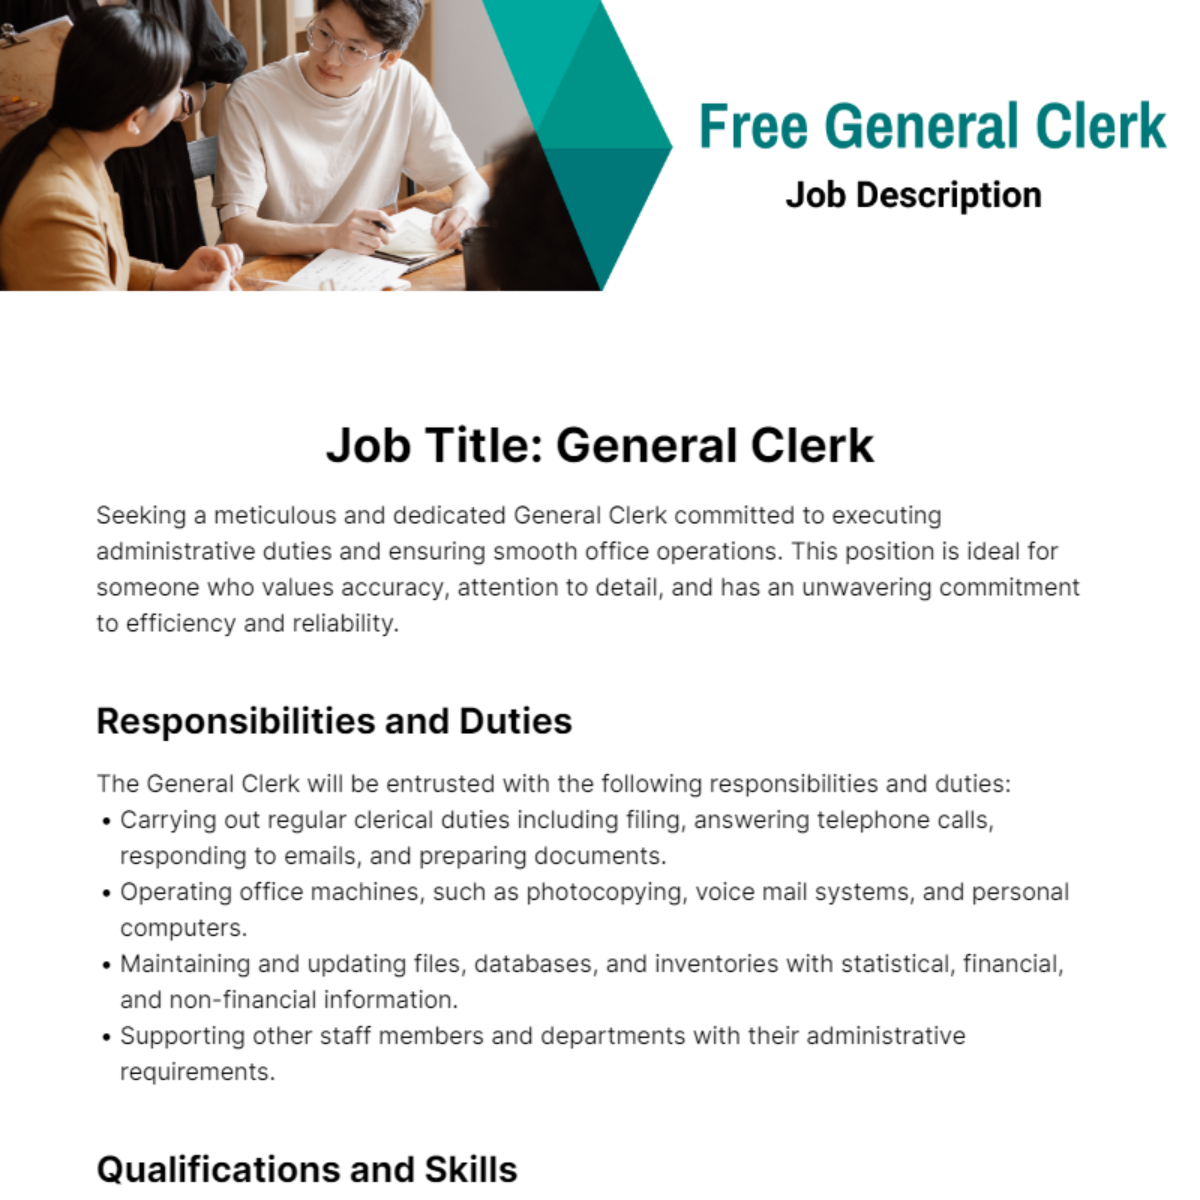 Free General Clerk Job Description Template